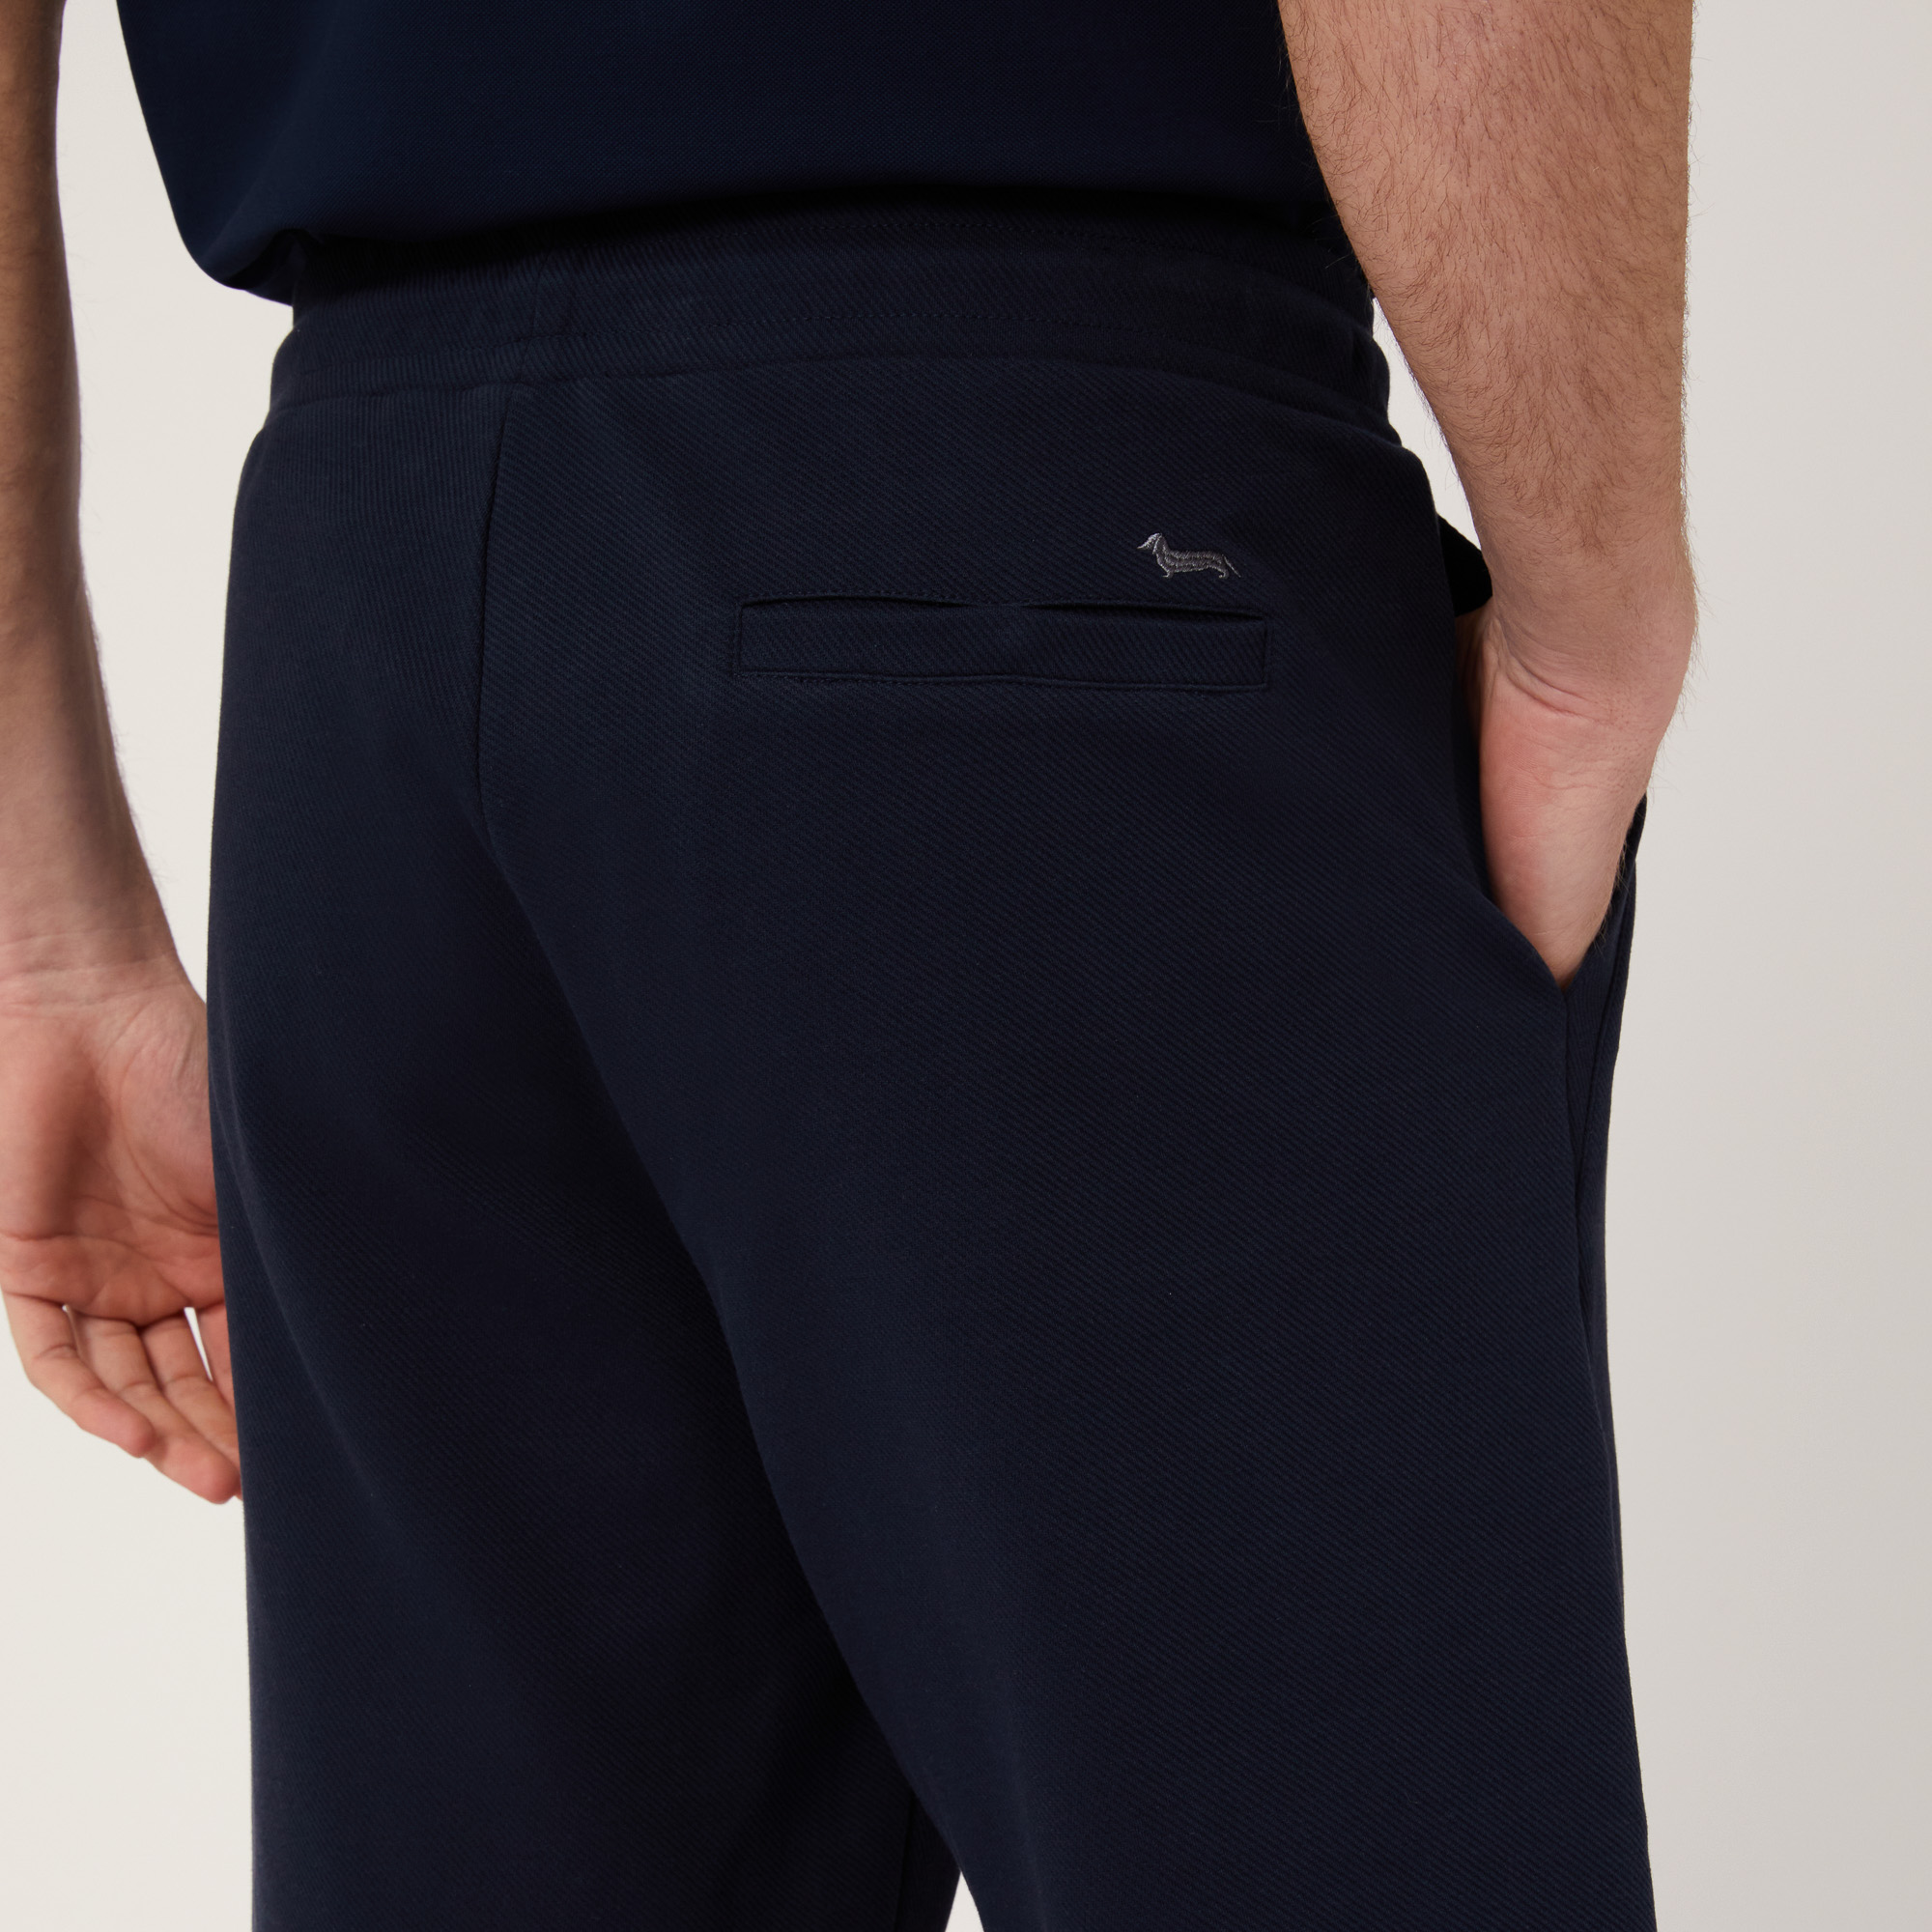 Stretch Cotton Shorts with Back Pocket, Blue, large image number 2